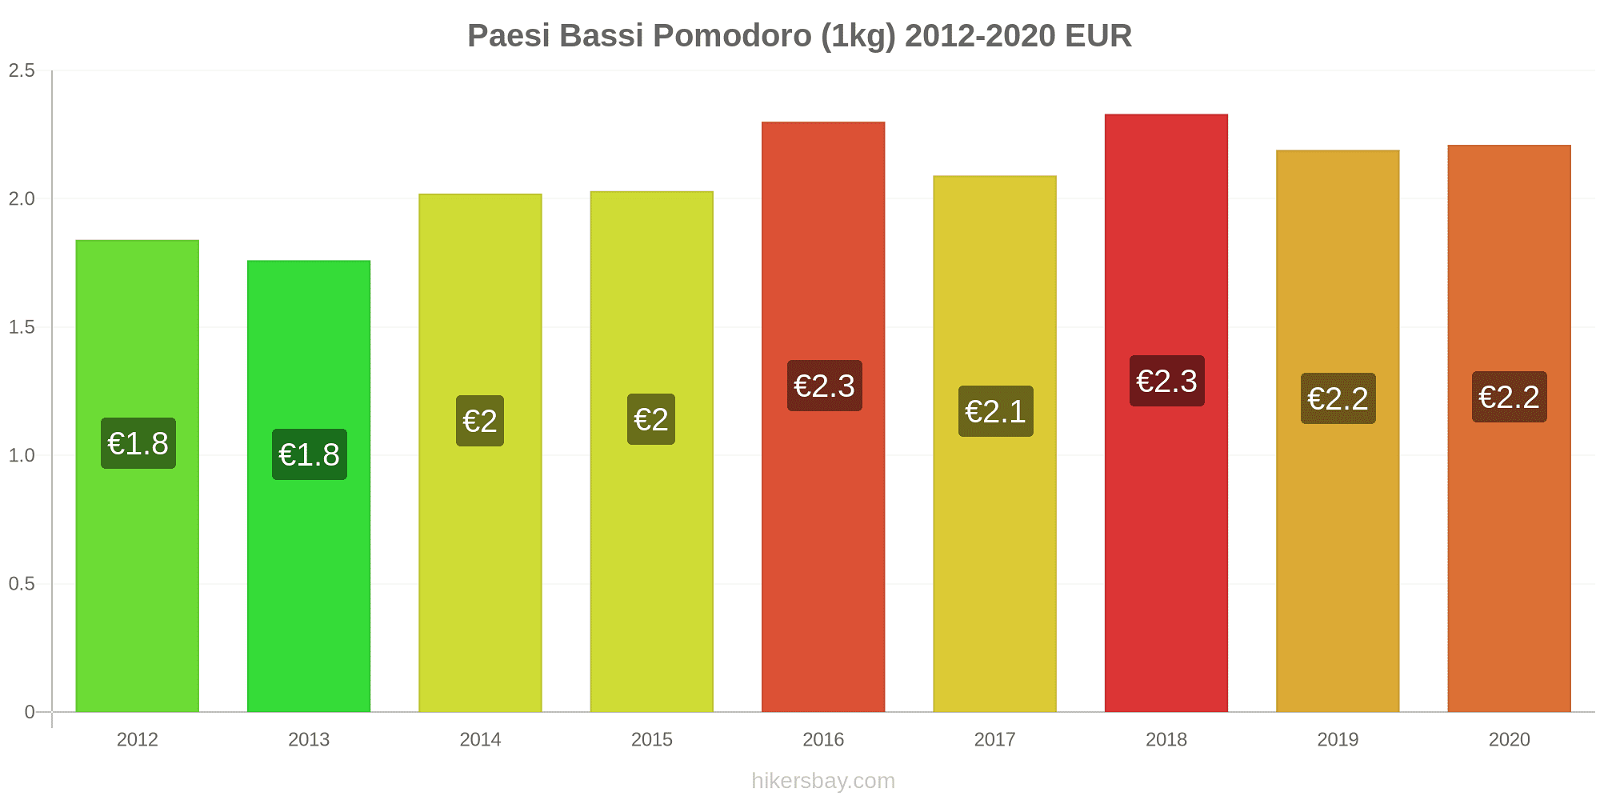 Paesi Bassi variazioni di prezzo Pomodoro (1kg) hikersbay.com